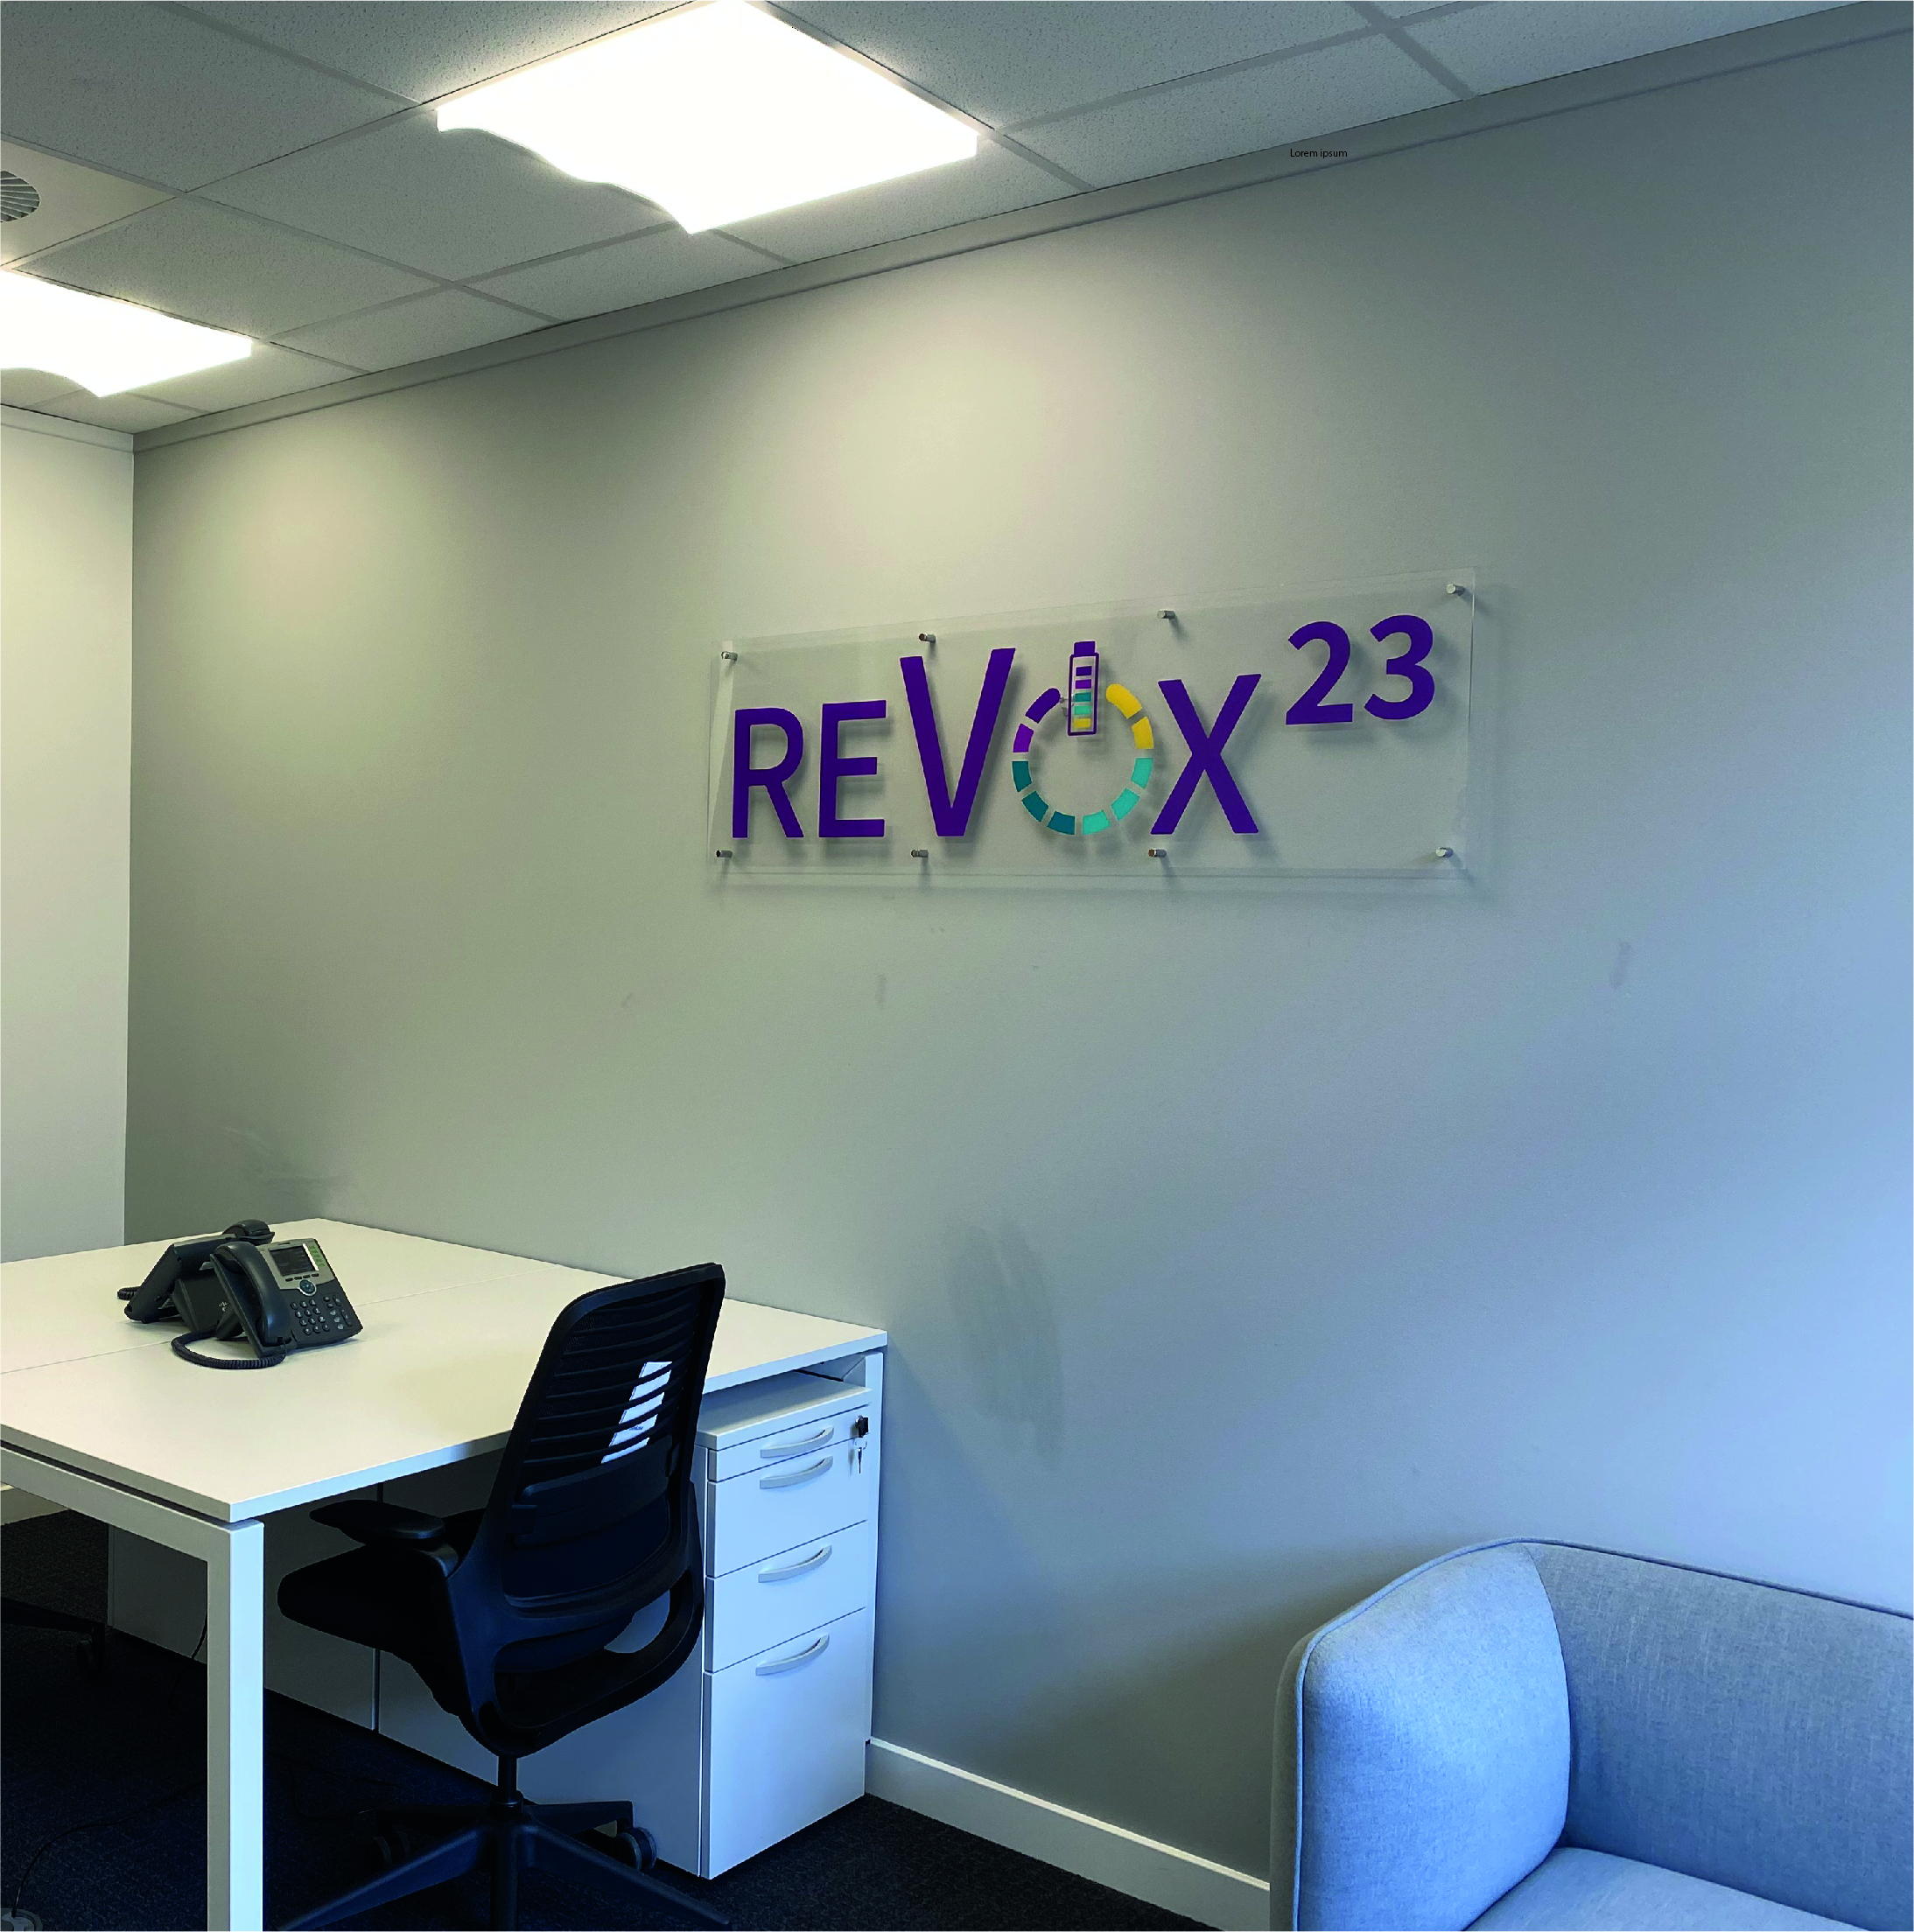 Revox23